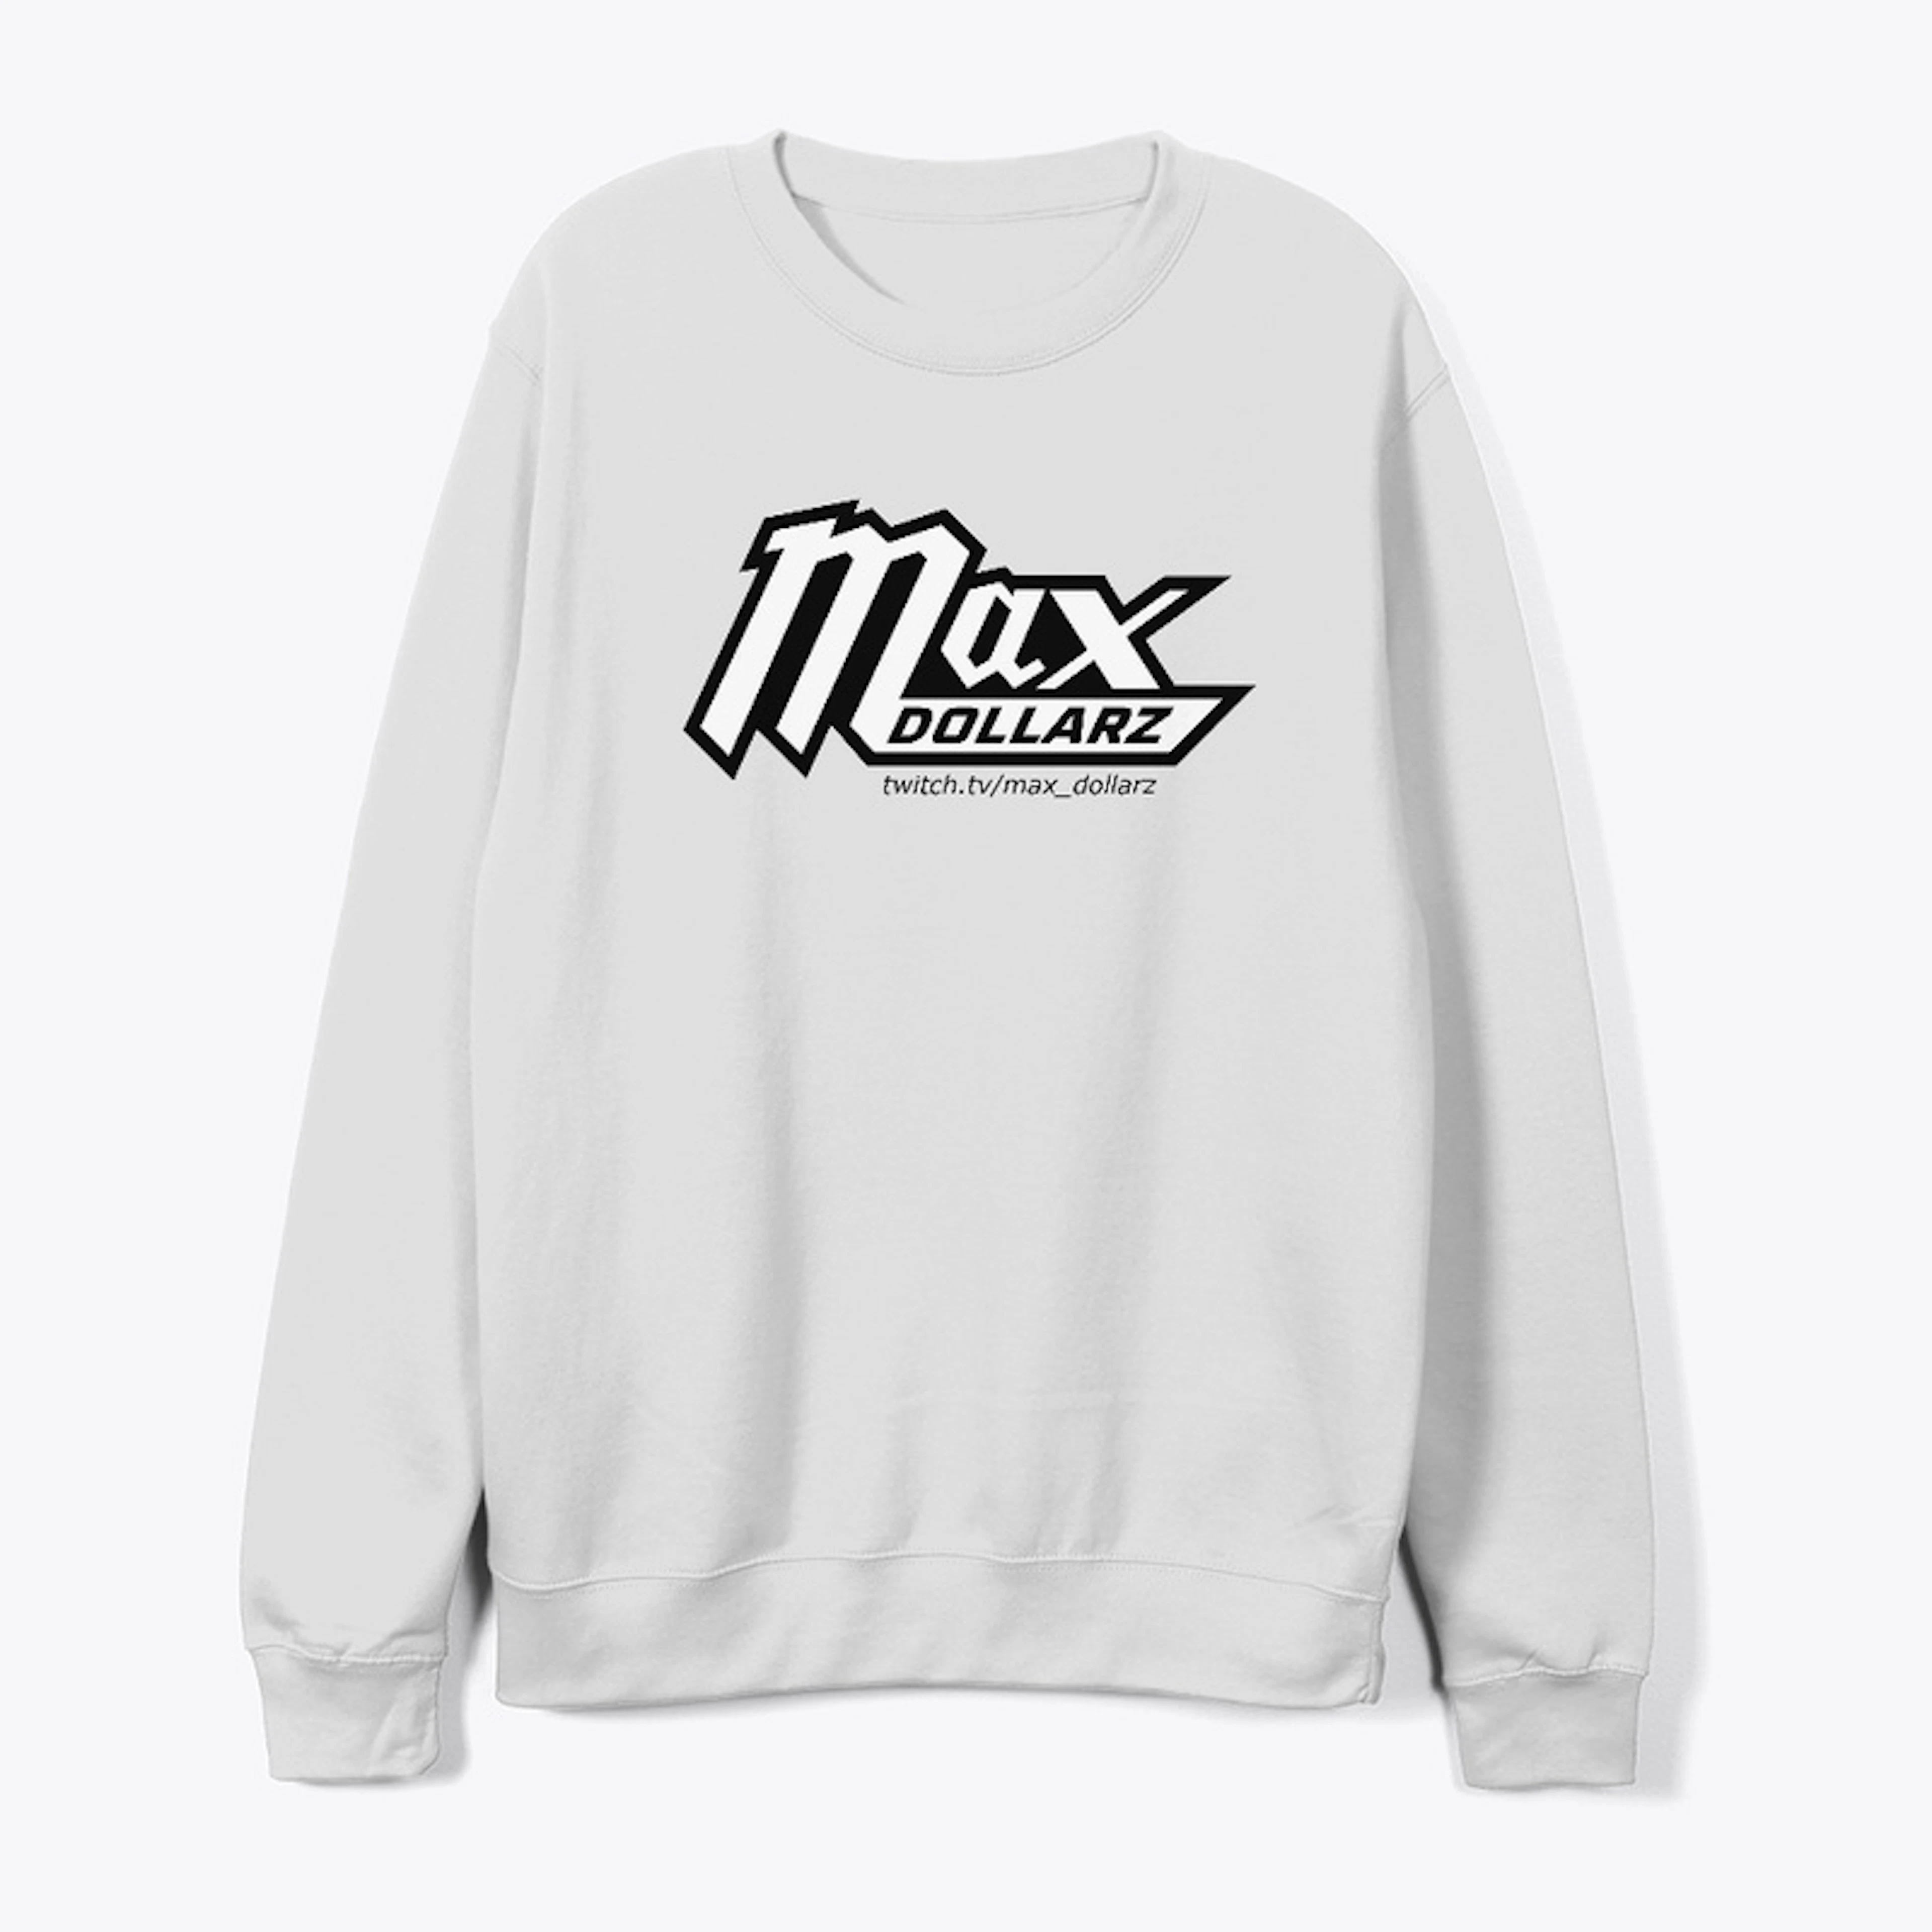 Max Dollarz Sweatshirt